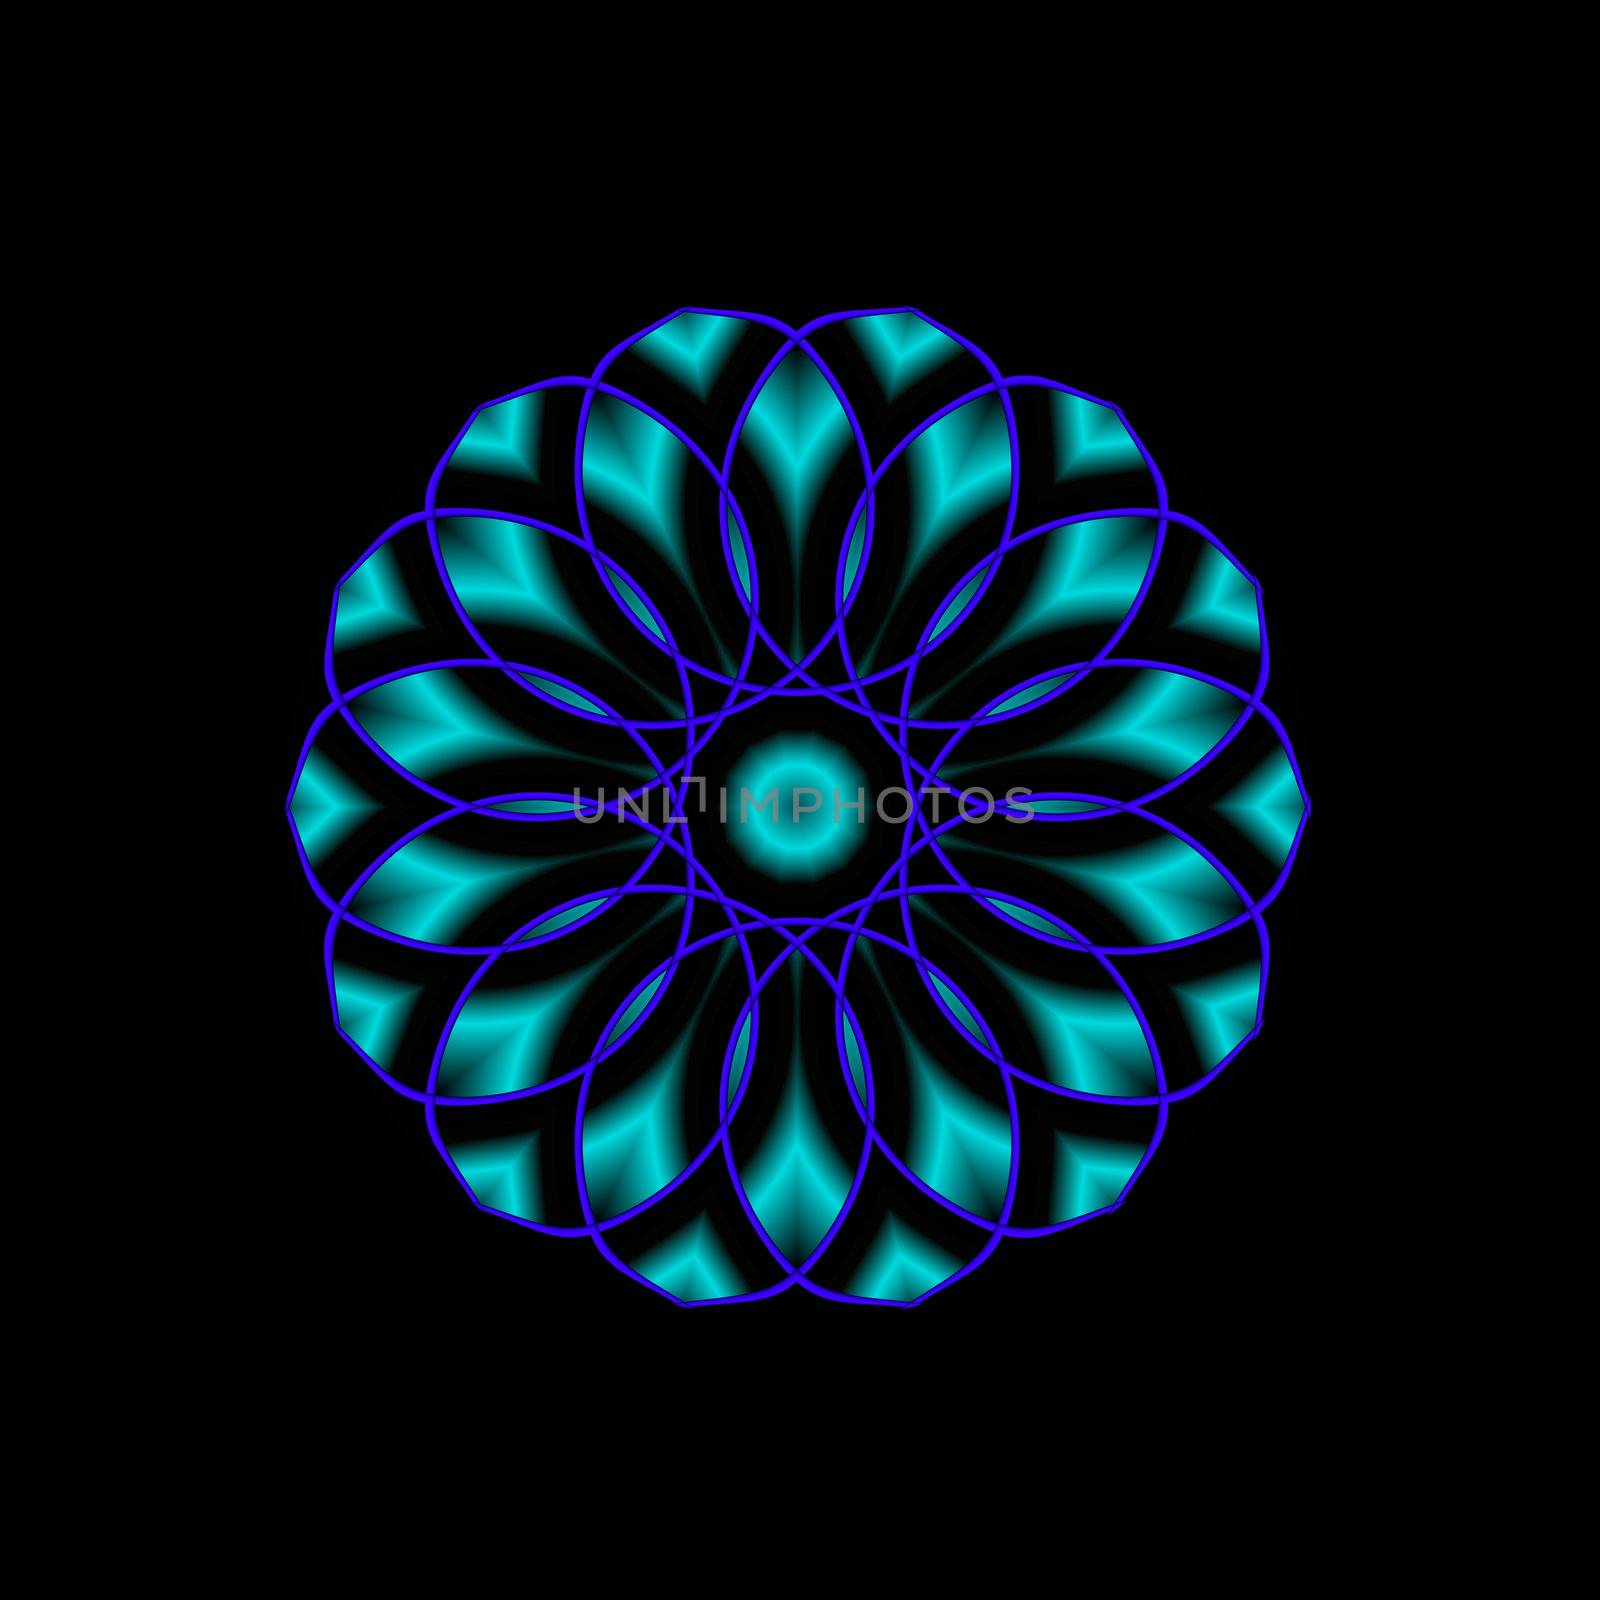 A mandala shaped fractal done in shades of blue.